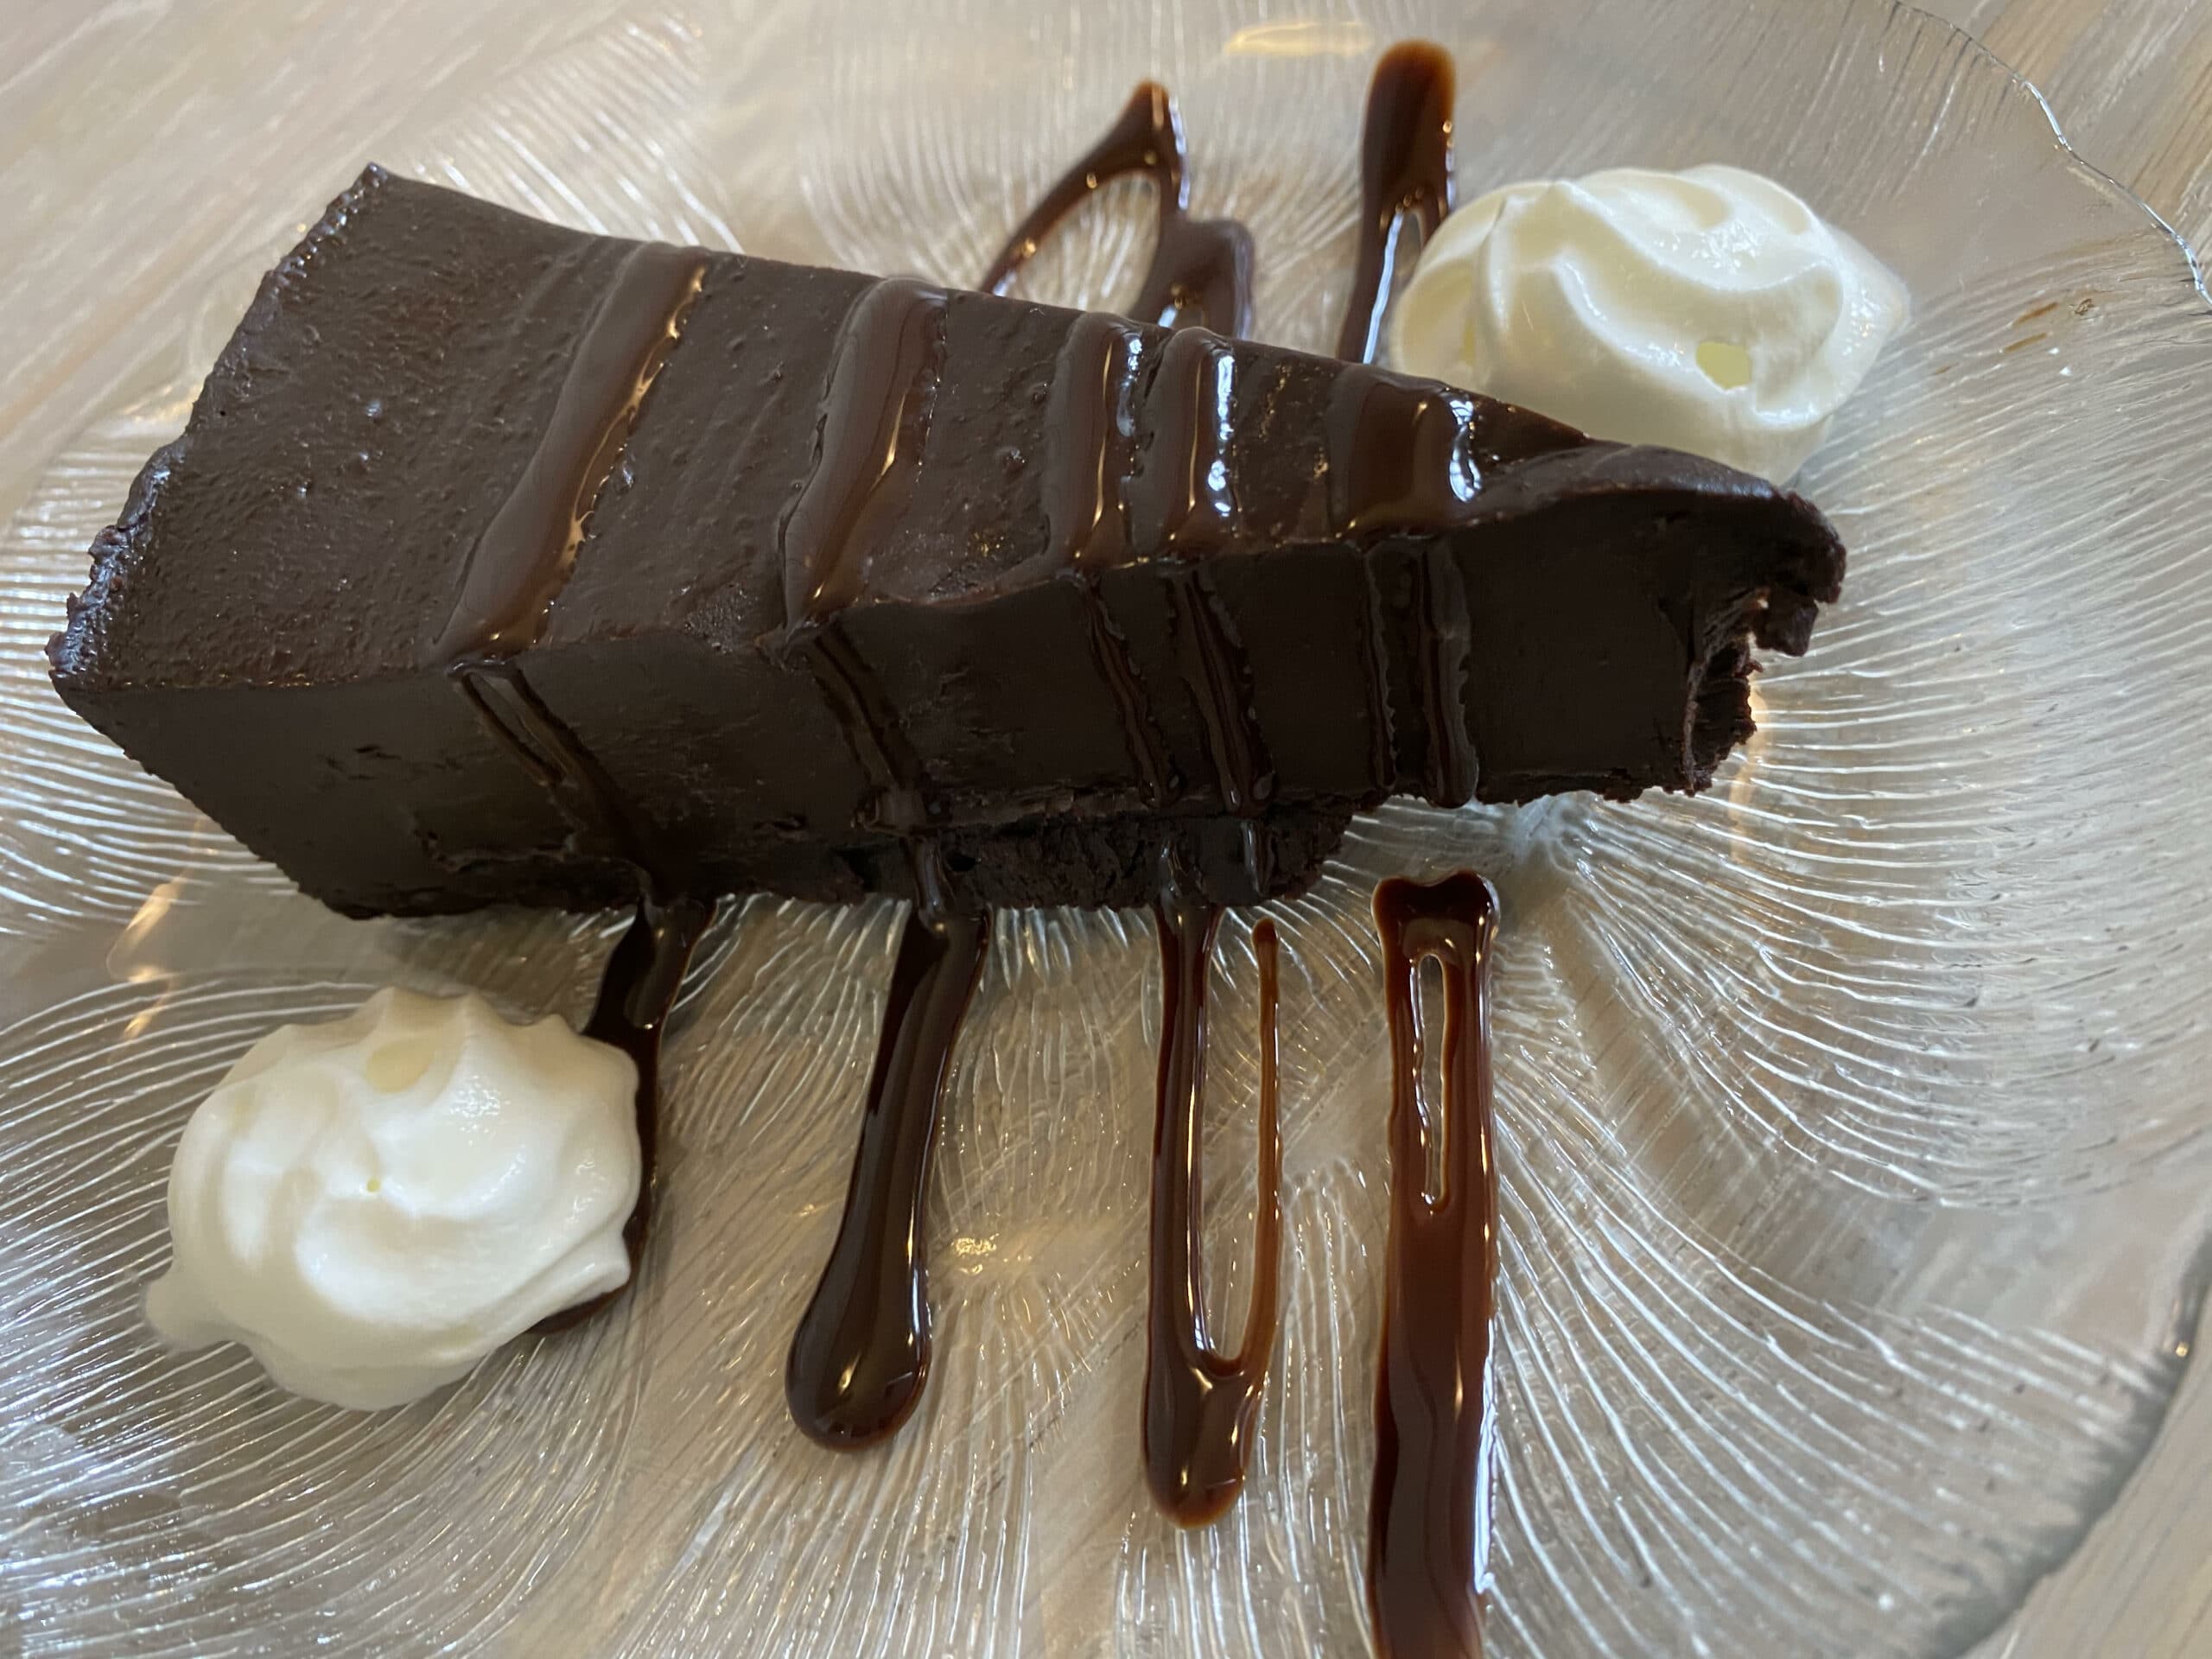 Chocolate cake with caramel and cream